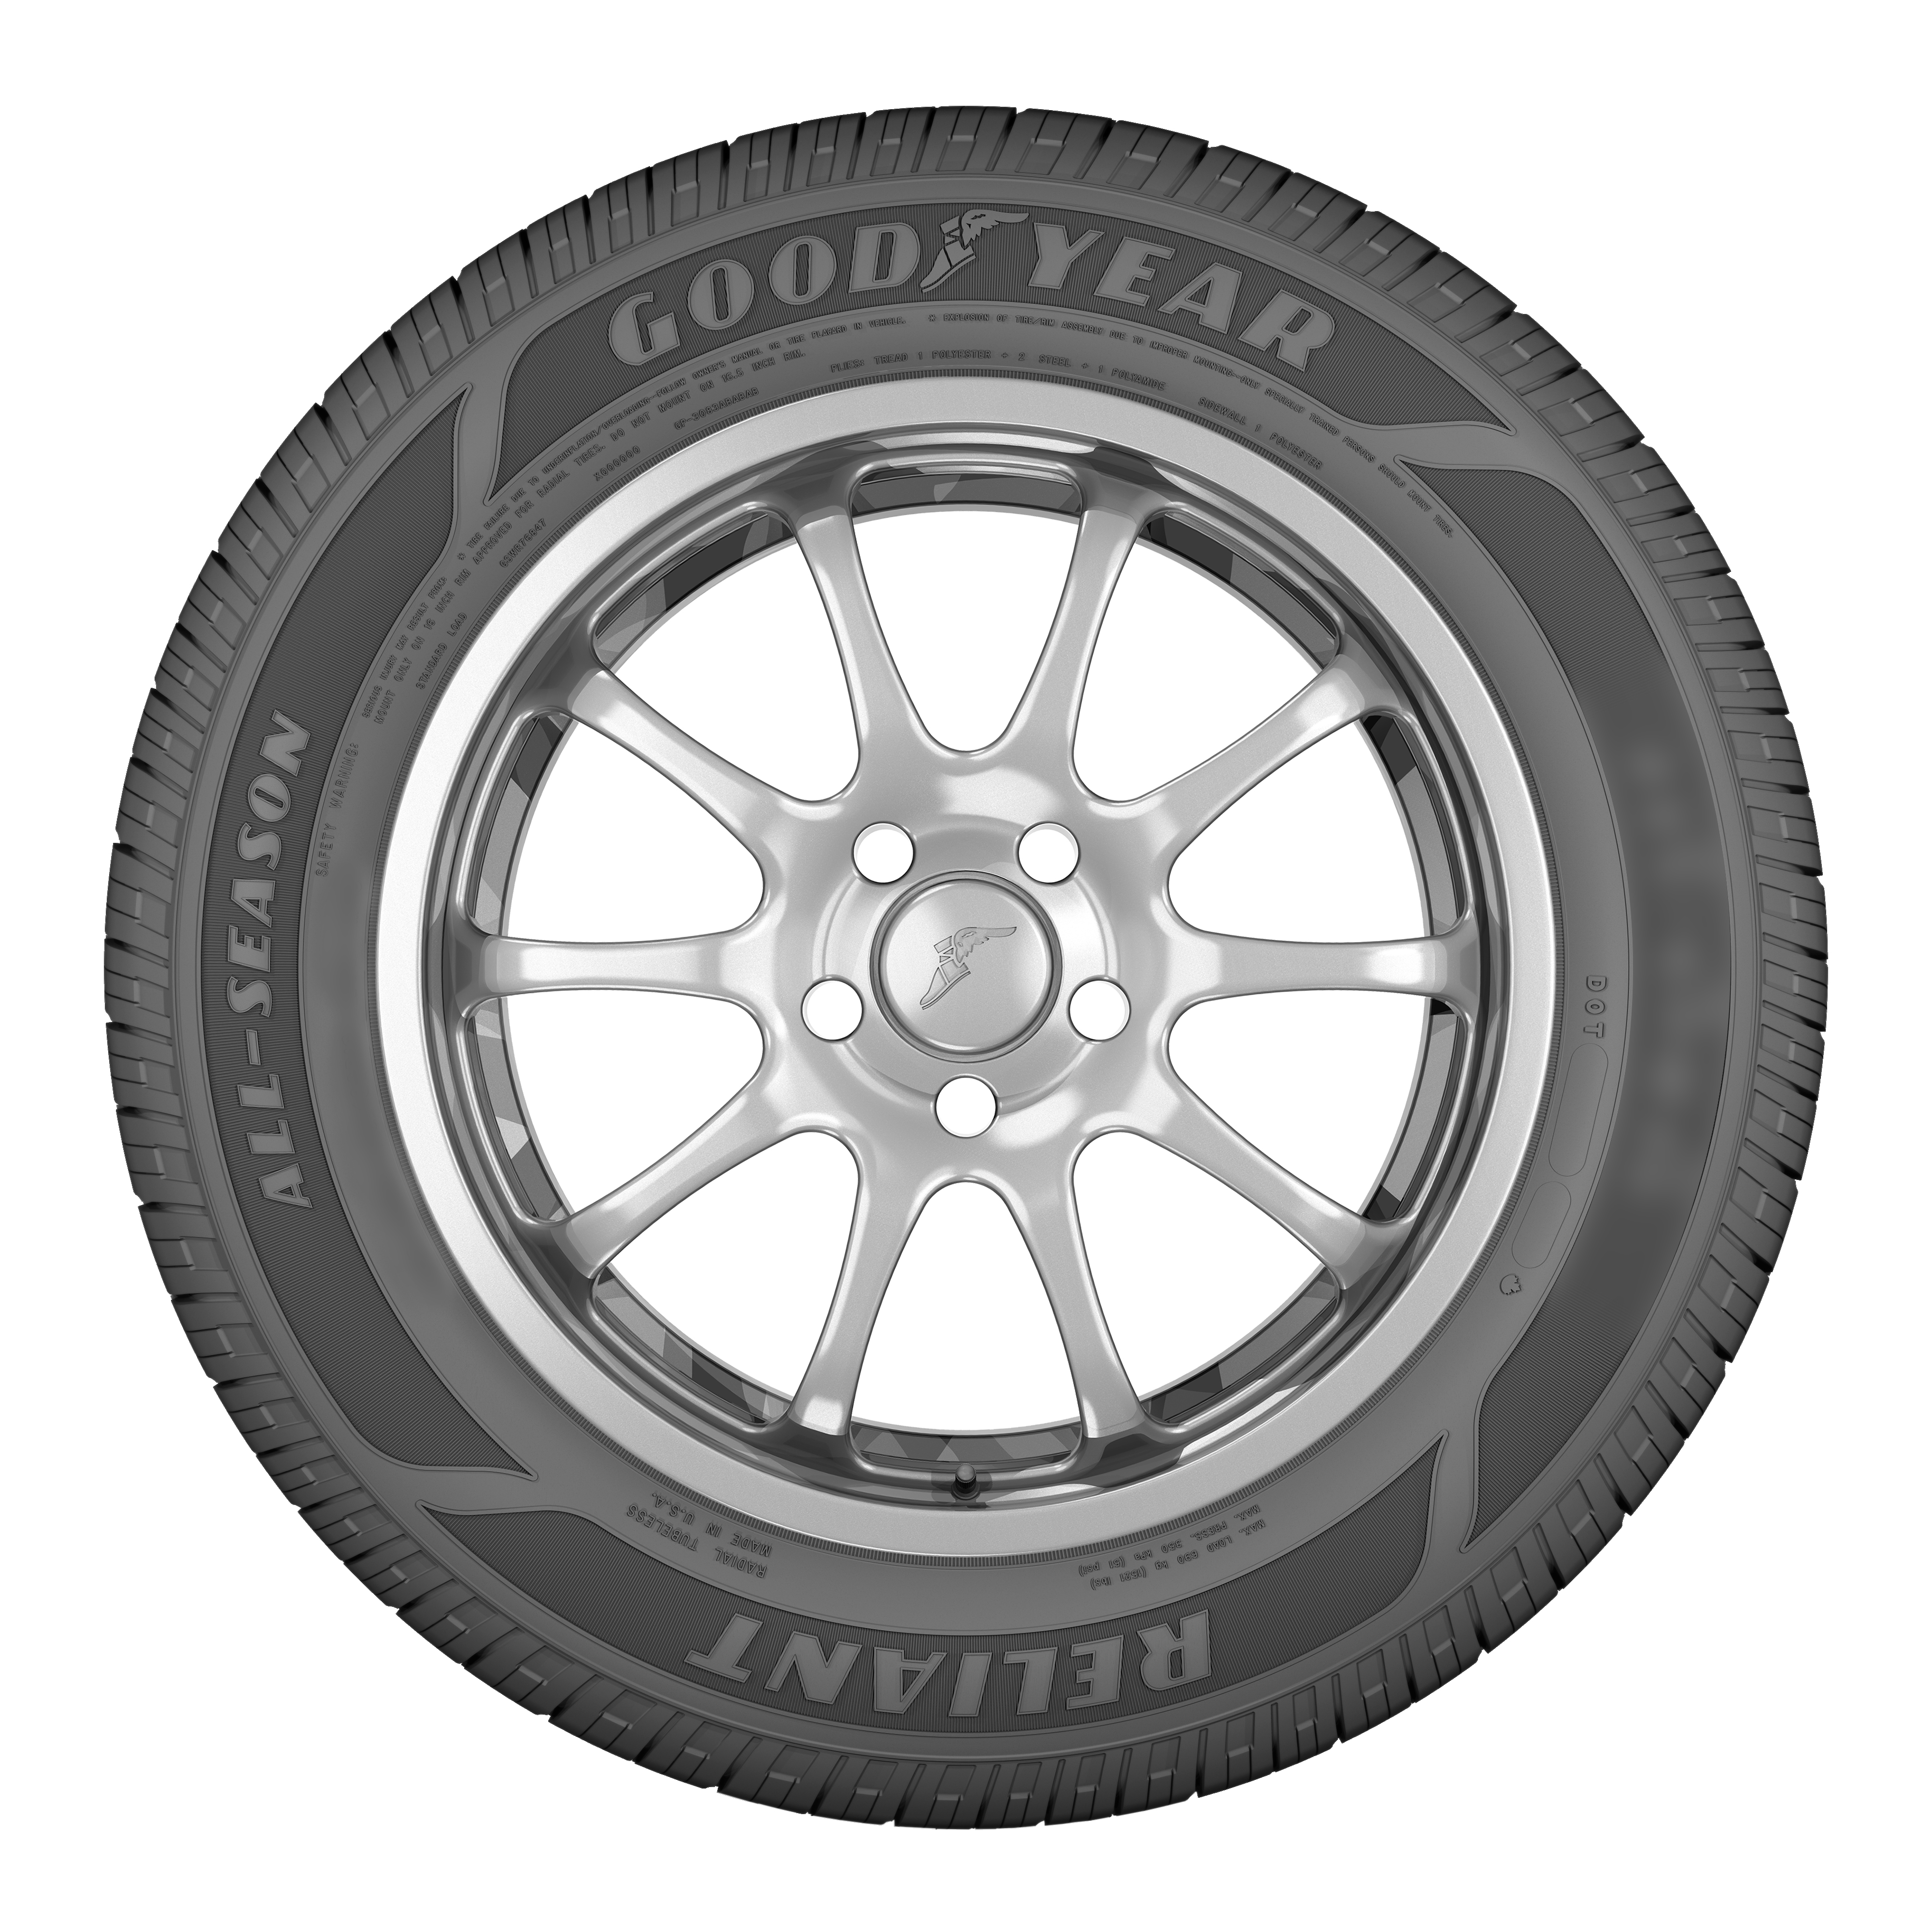 Goodyear Reliant All-Season 225/60R16 98H All-Season Tire - image 3 of 8